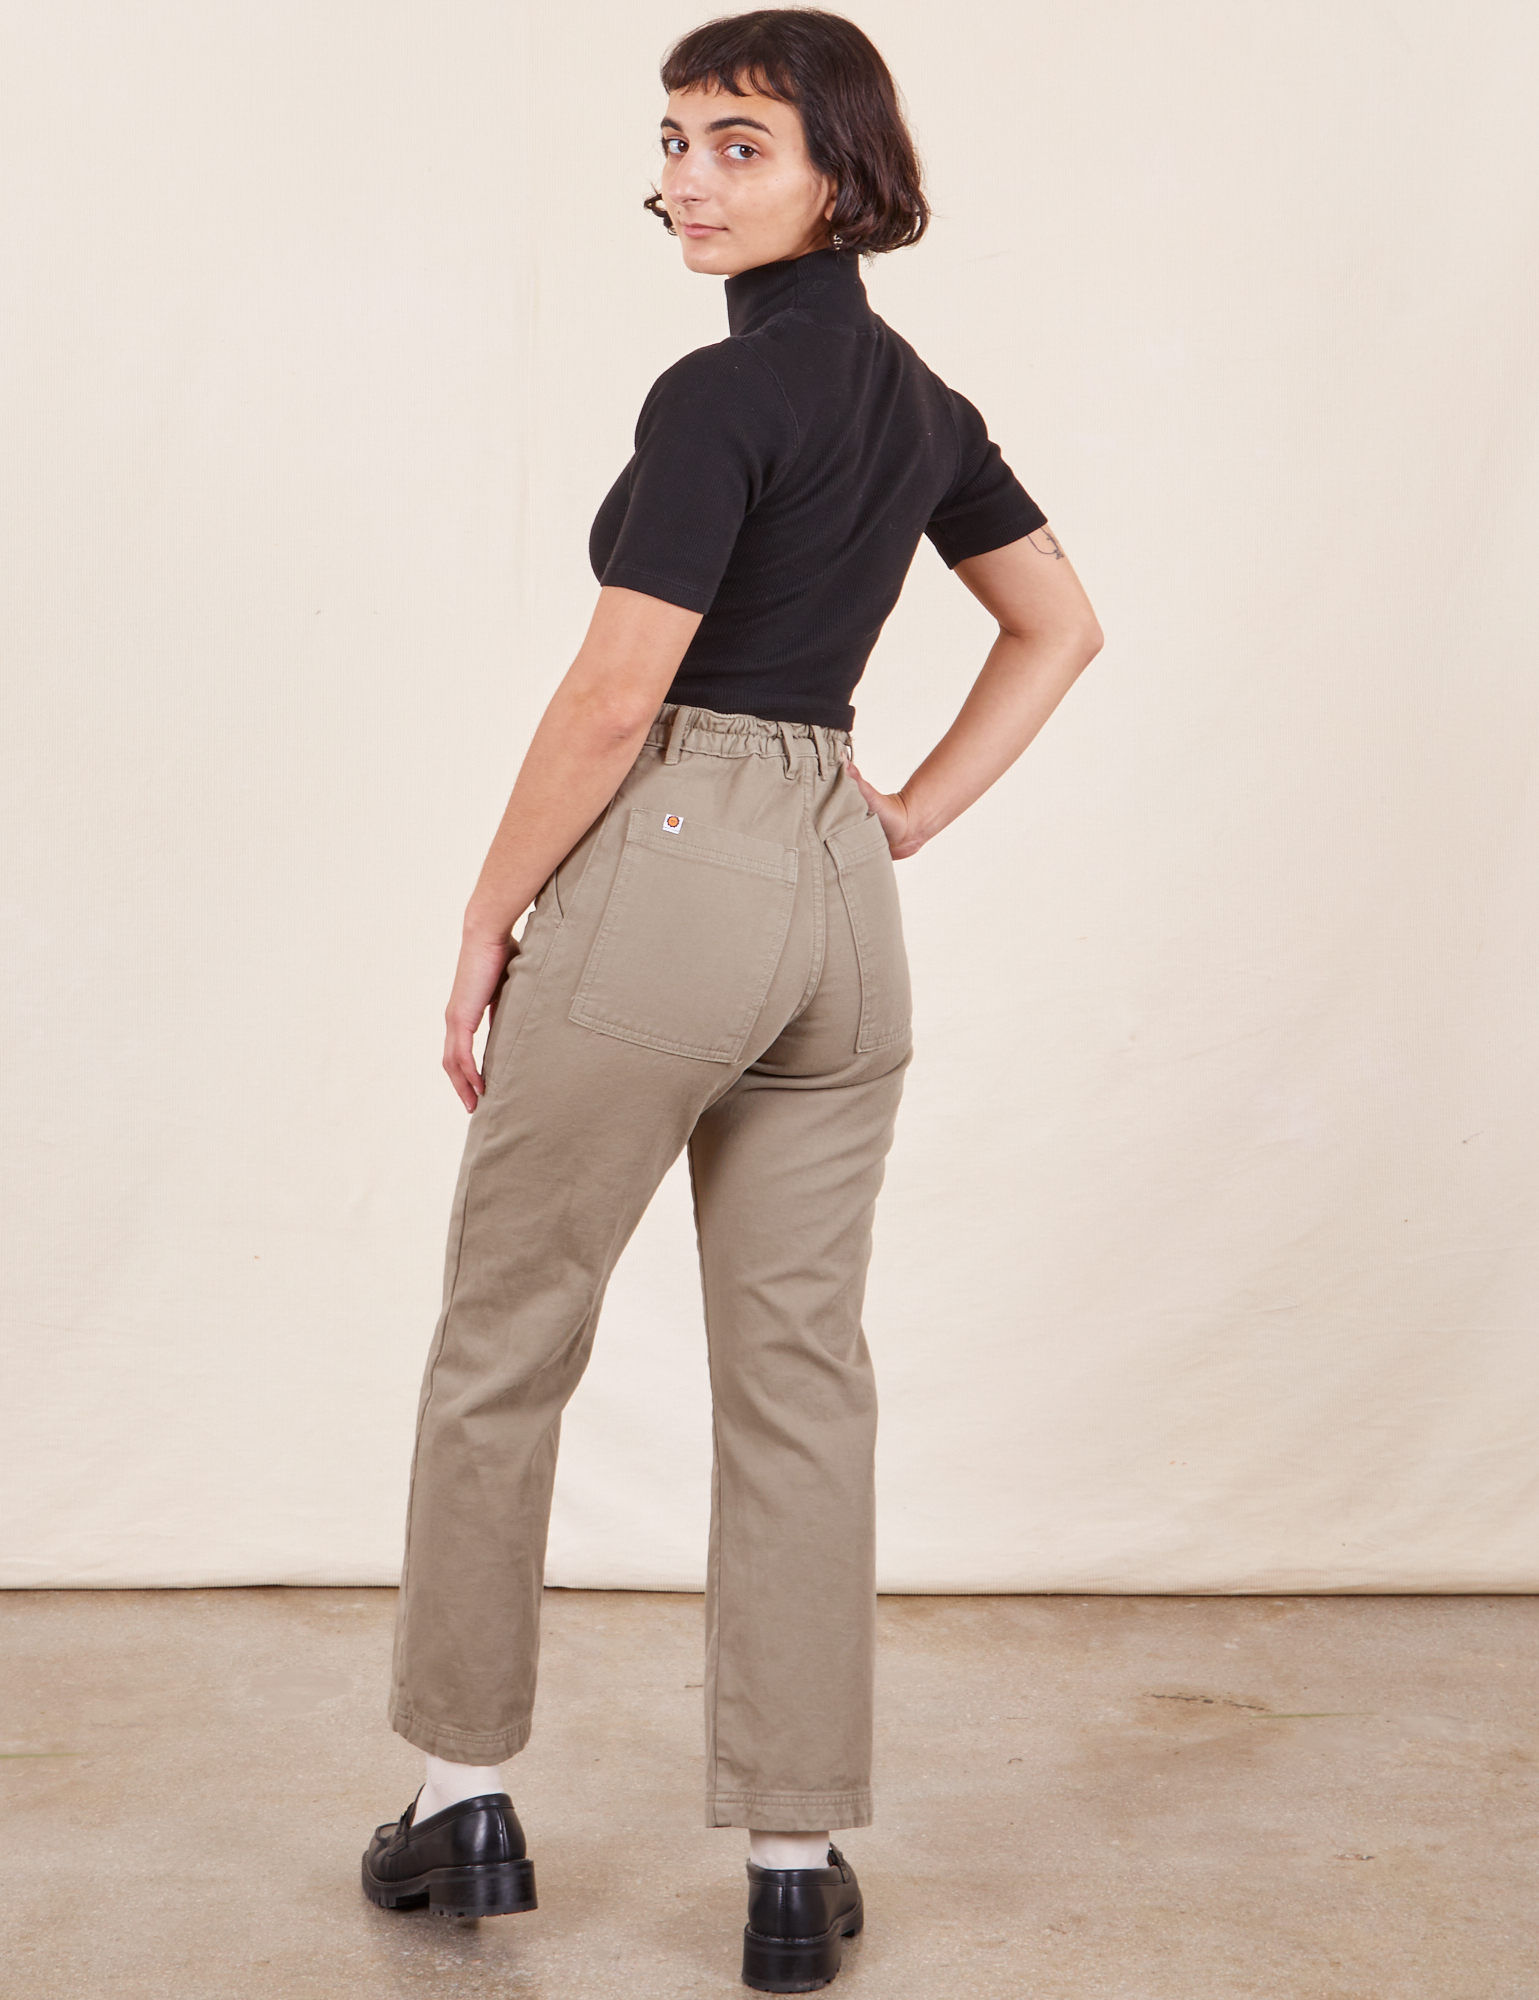 Work Pants in Khaki Grey back view on Soraya wearing black 1/2 Sleeve Turtleneck